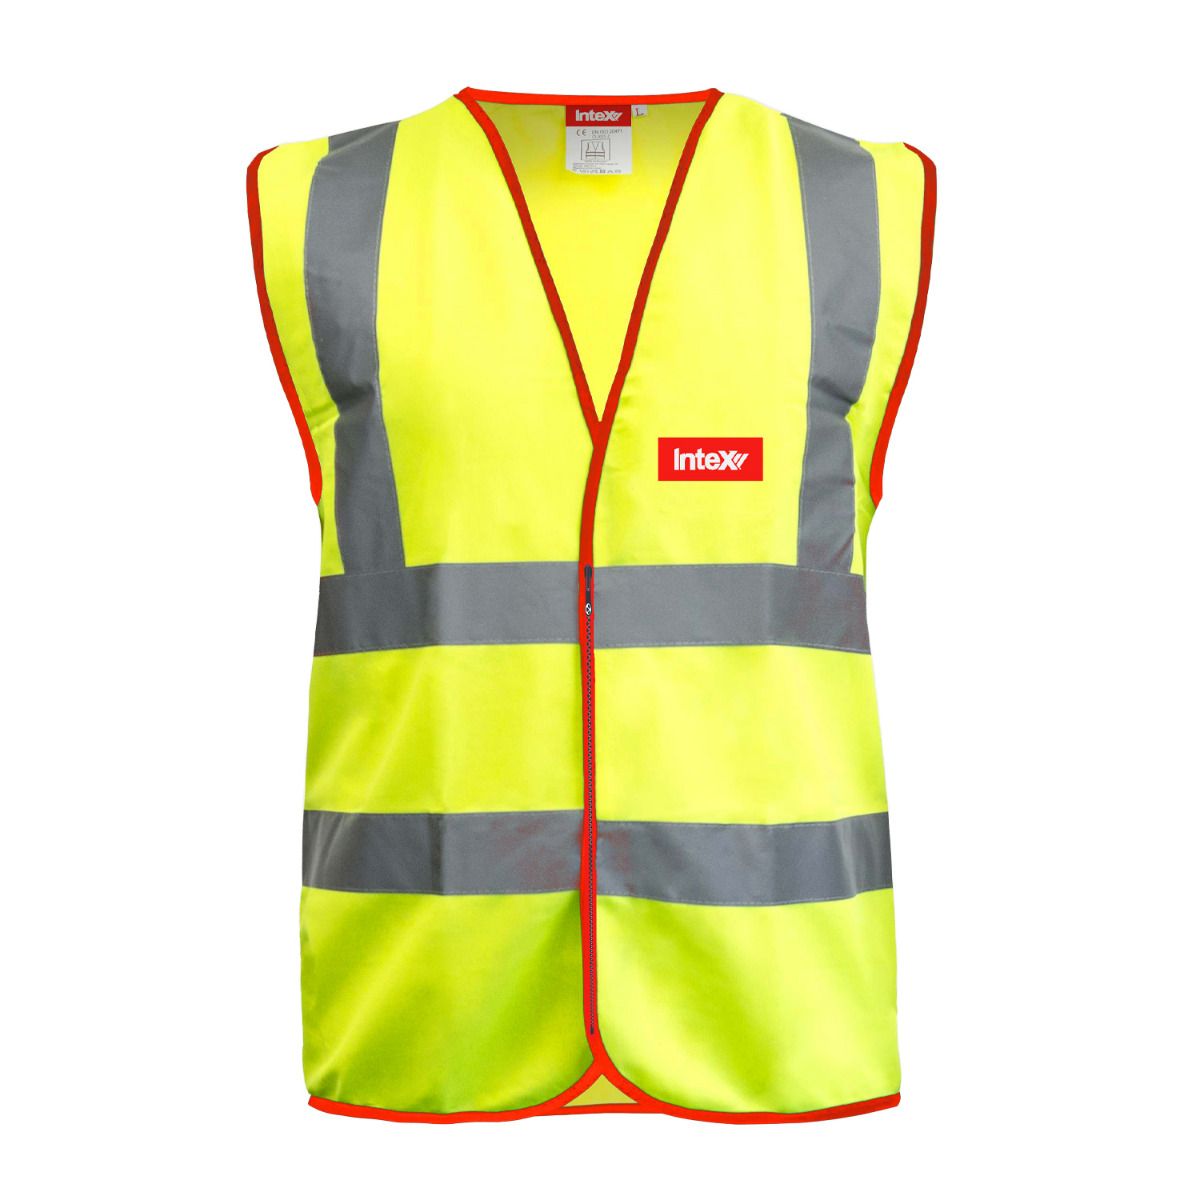 Intex ProtecX Hi-Vis Reflective Safety Vests